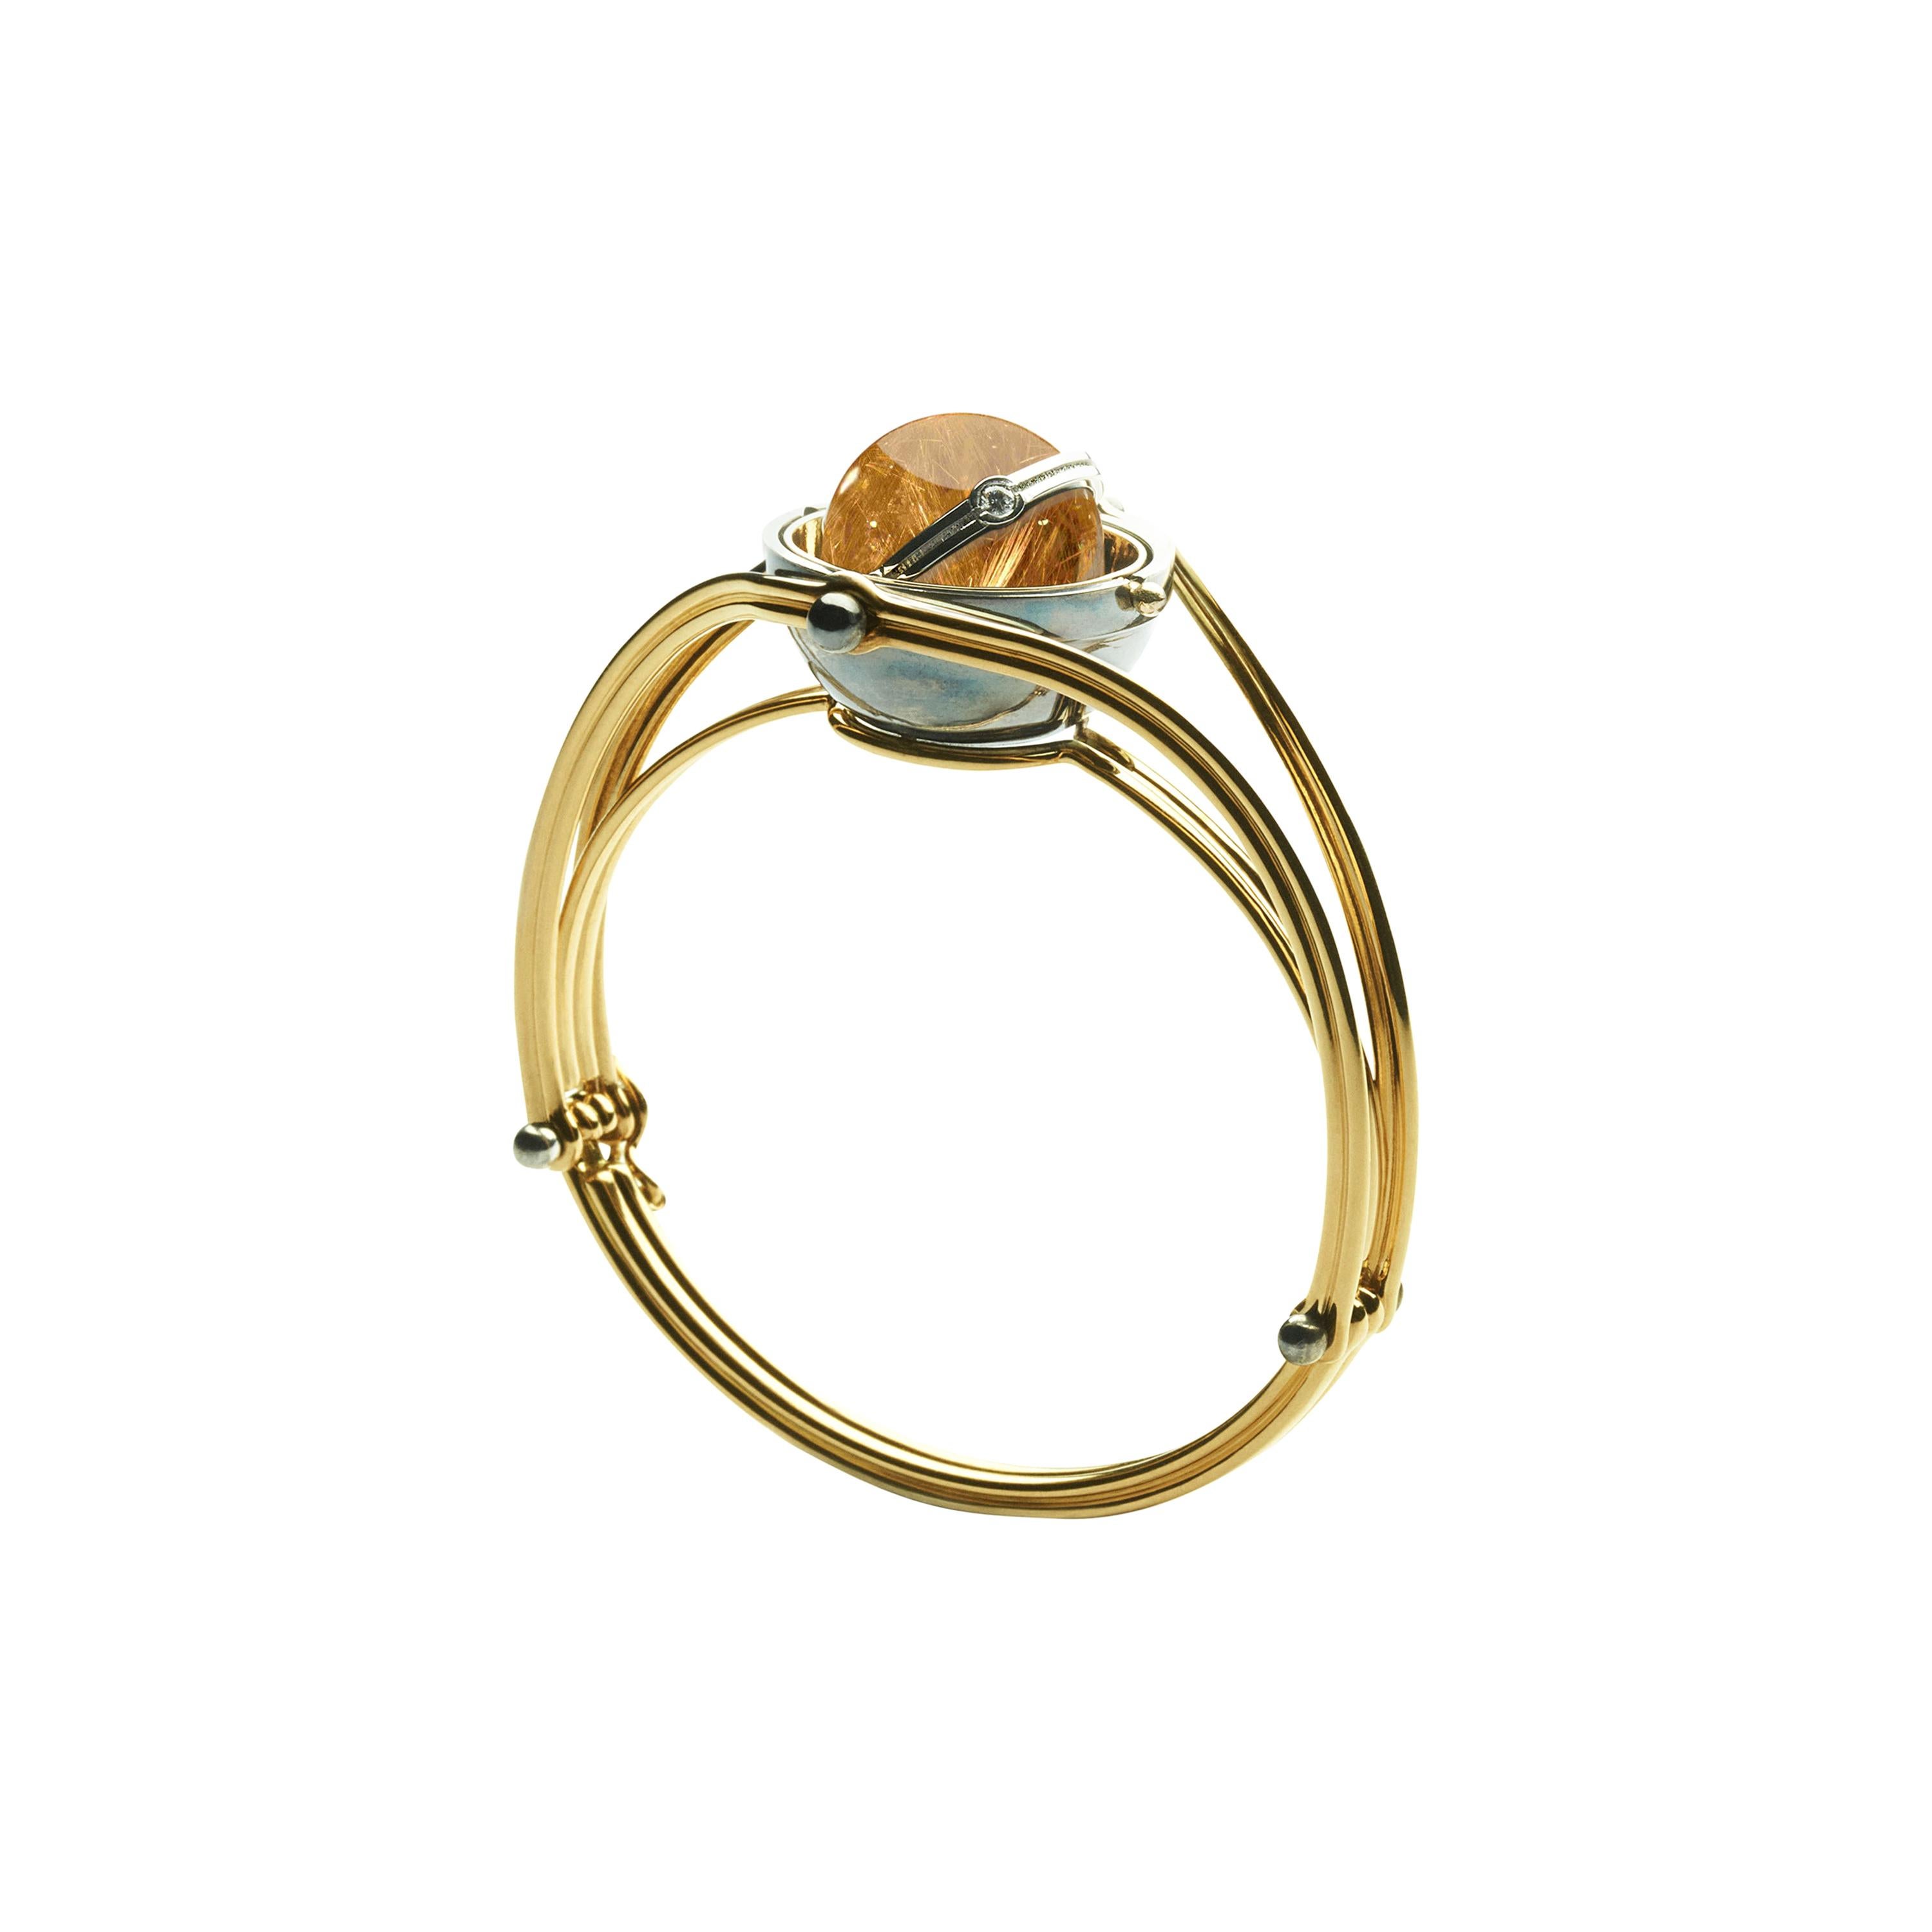 Diamonds Quartz Sphere Bracelet in 18k yellow gold by Elie Top